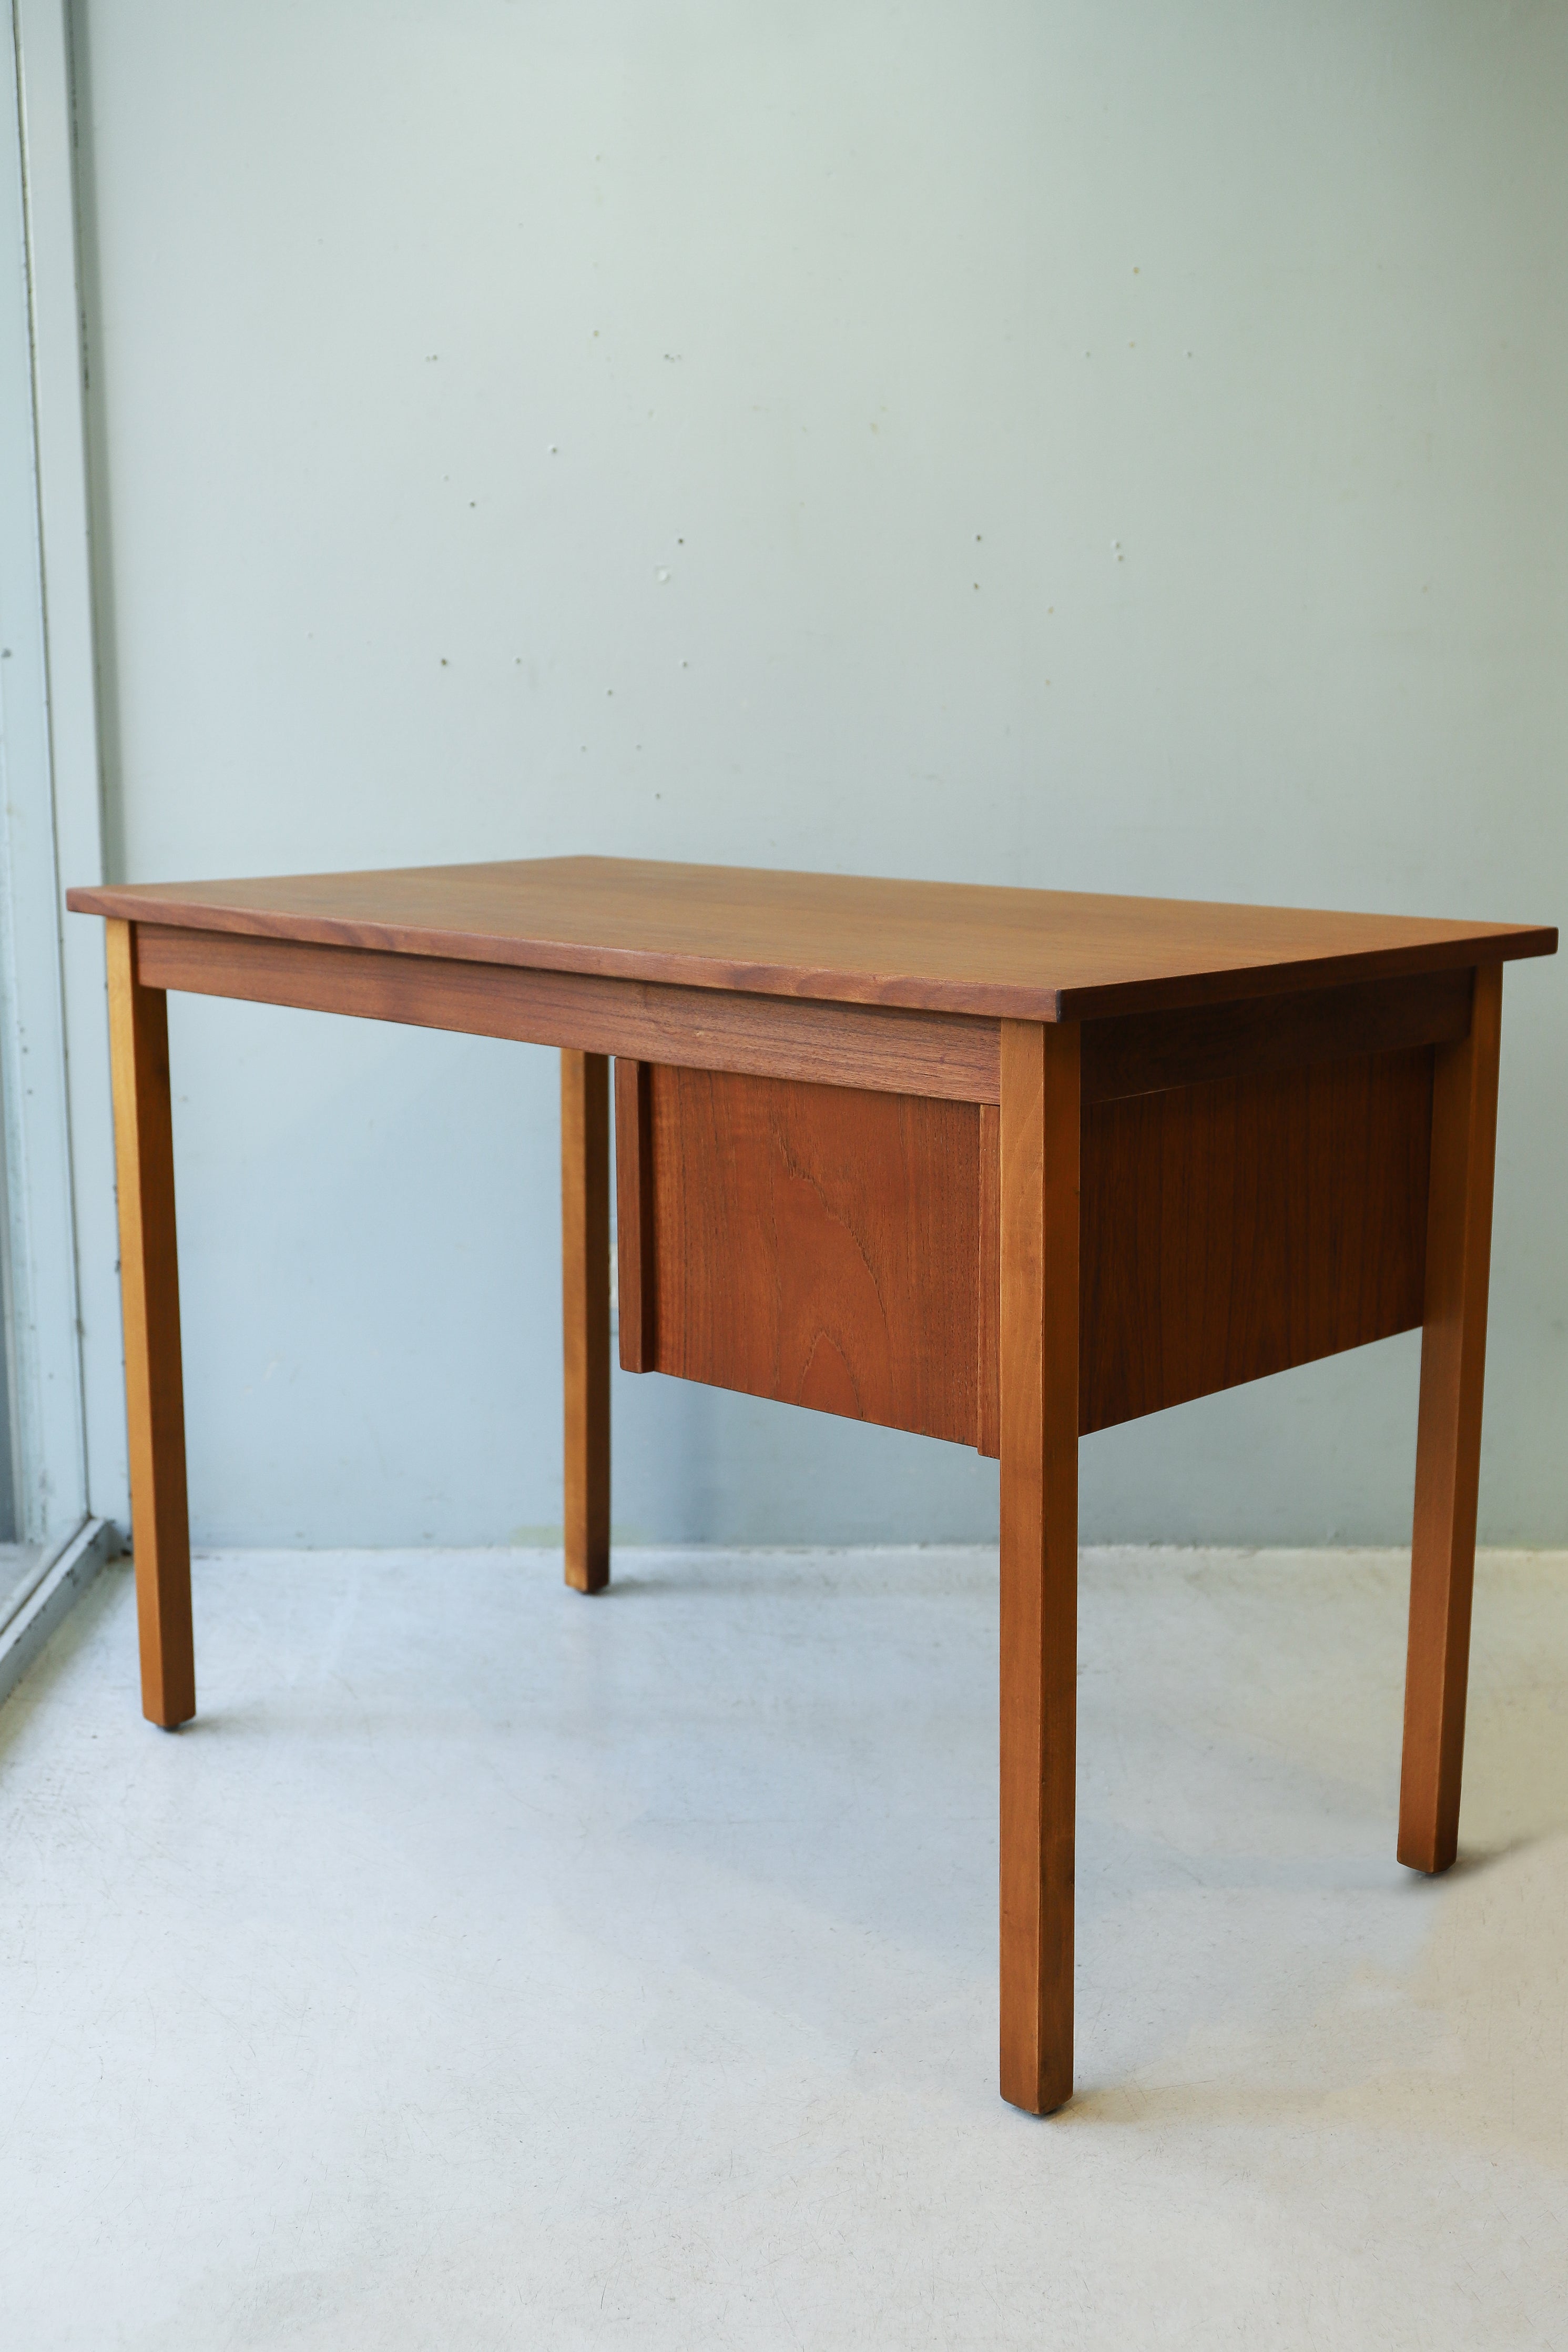 Single Pedestal Desk Danish Vintage/デンマークヴィンテージ 片袖デスク チーク材 北欧モダン